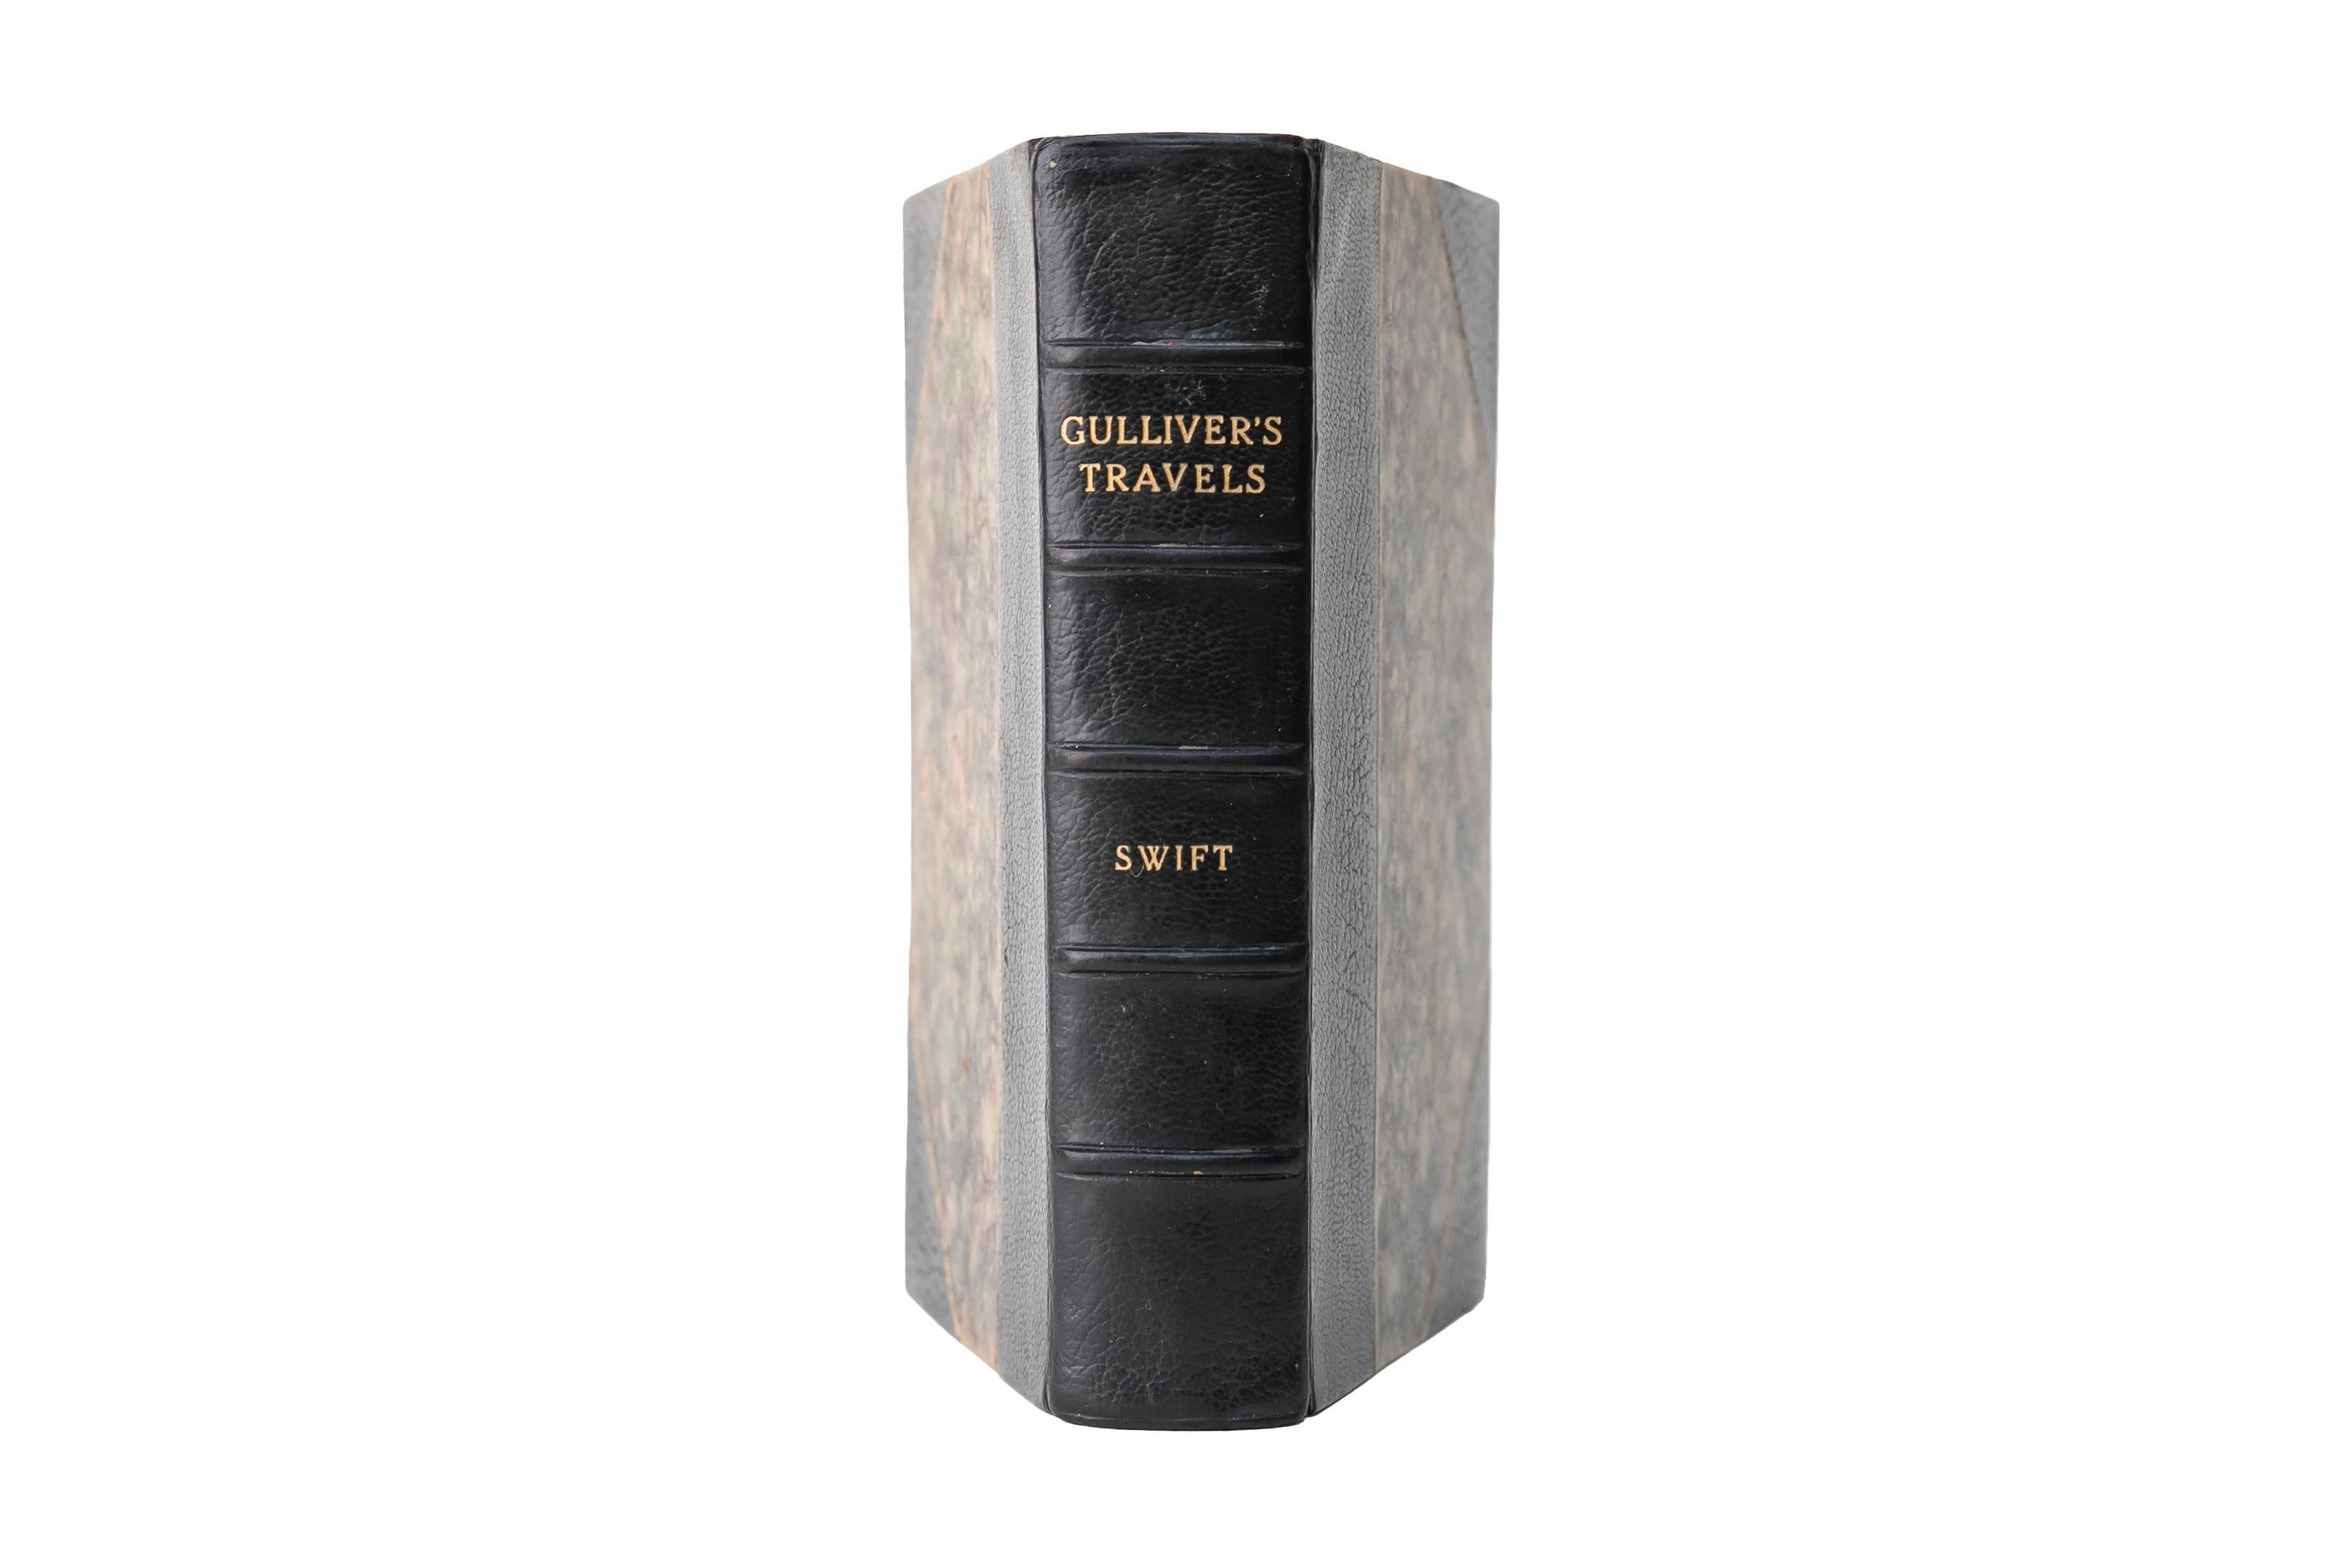 1 Volume. Jonathan Swift, Gulliver's Travels. For Sale